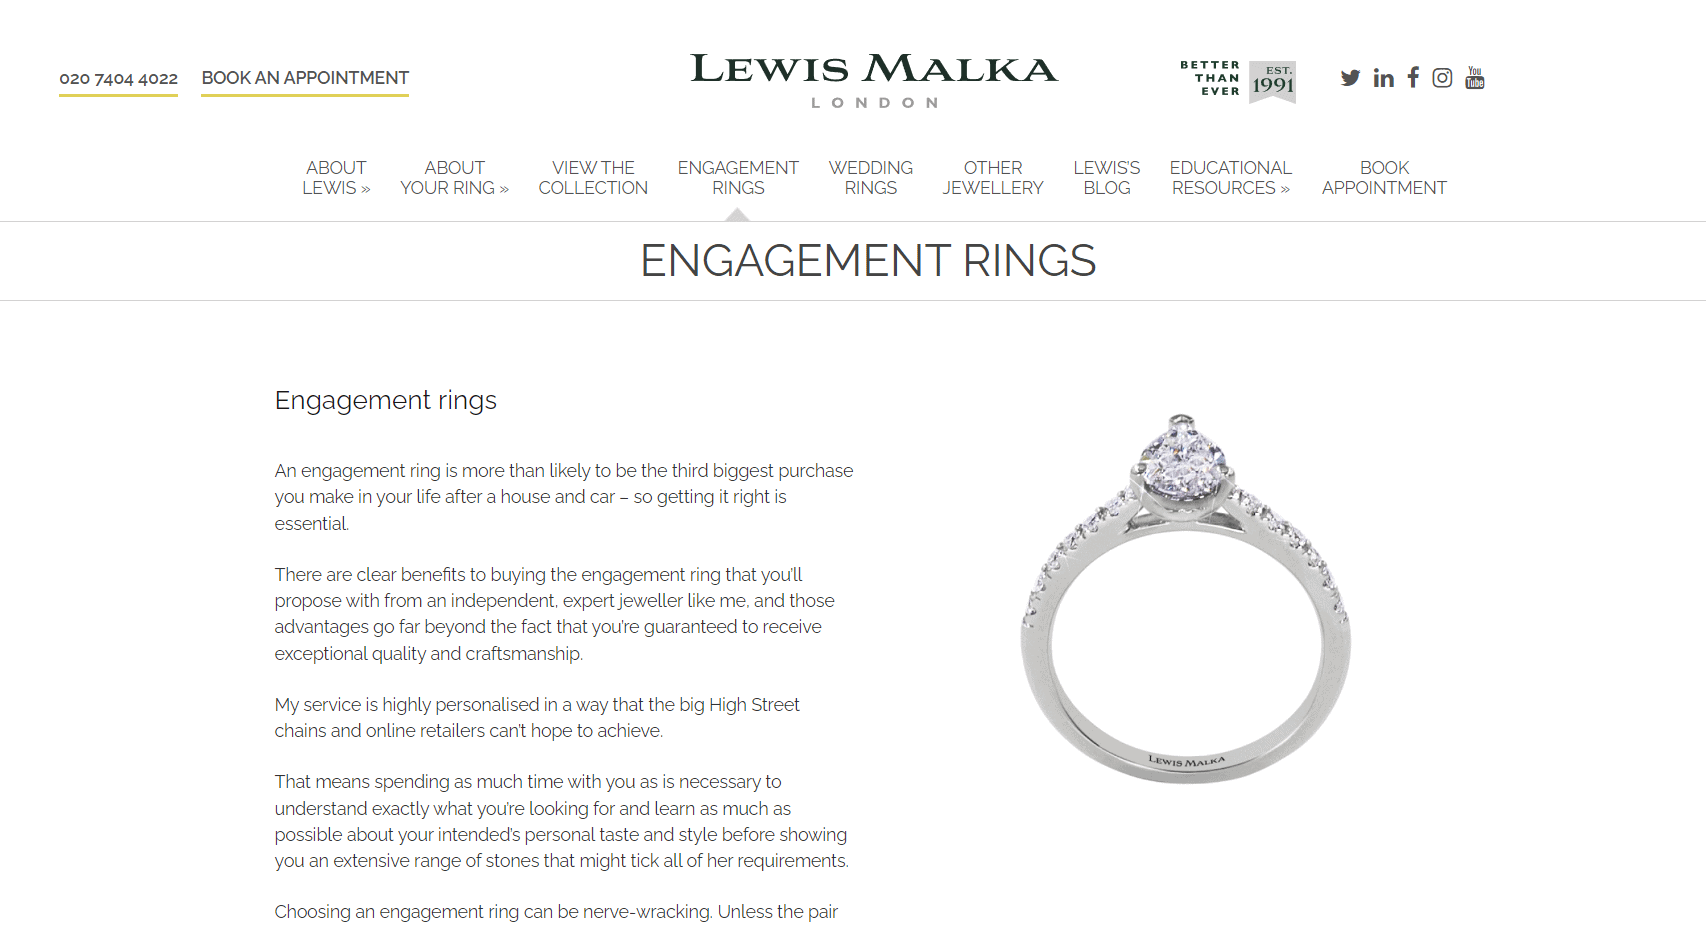 lewis malka engagement rings